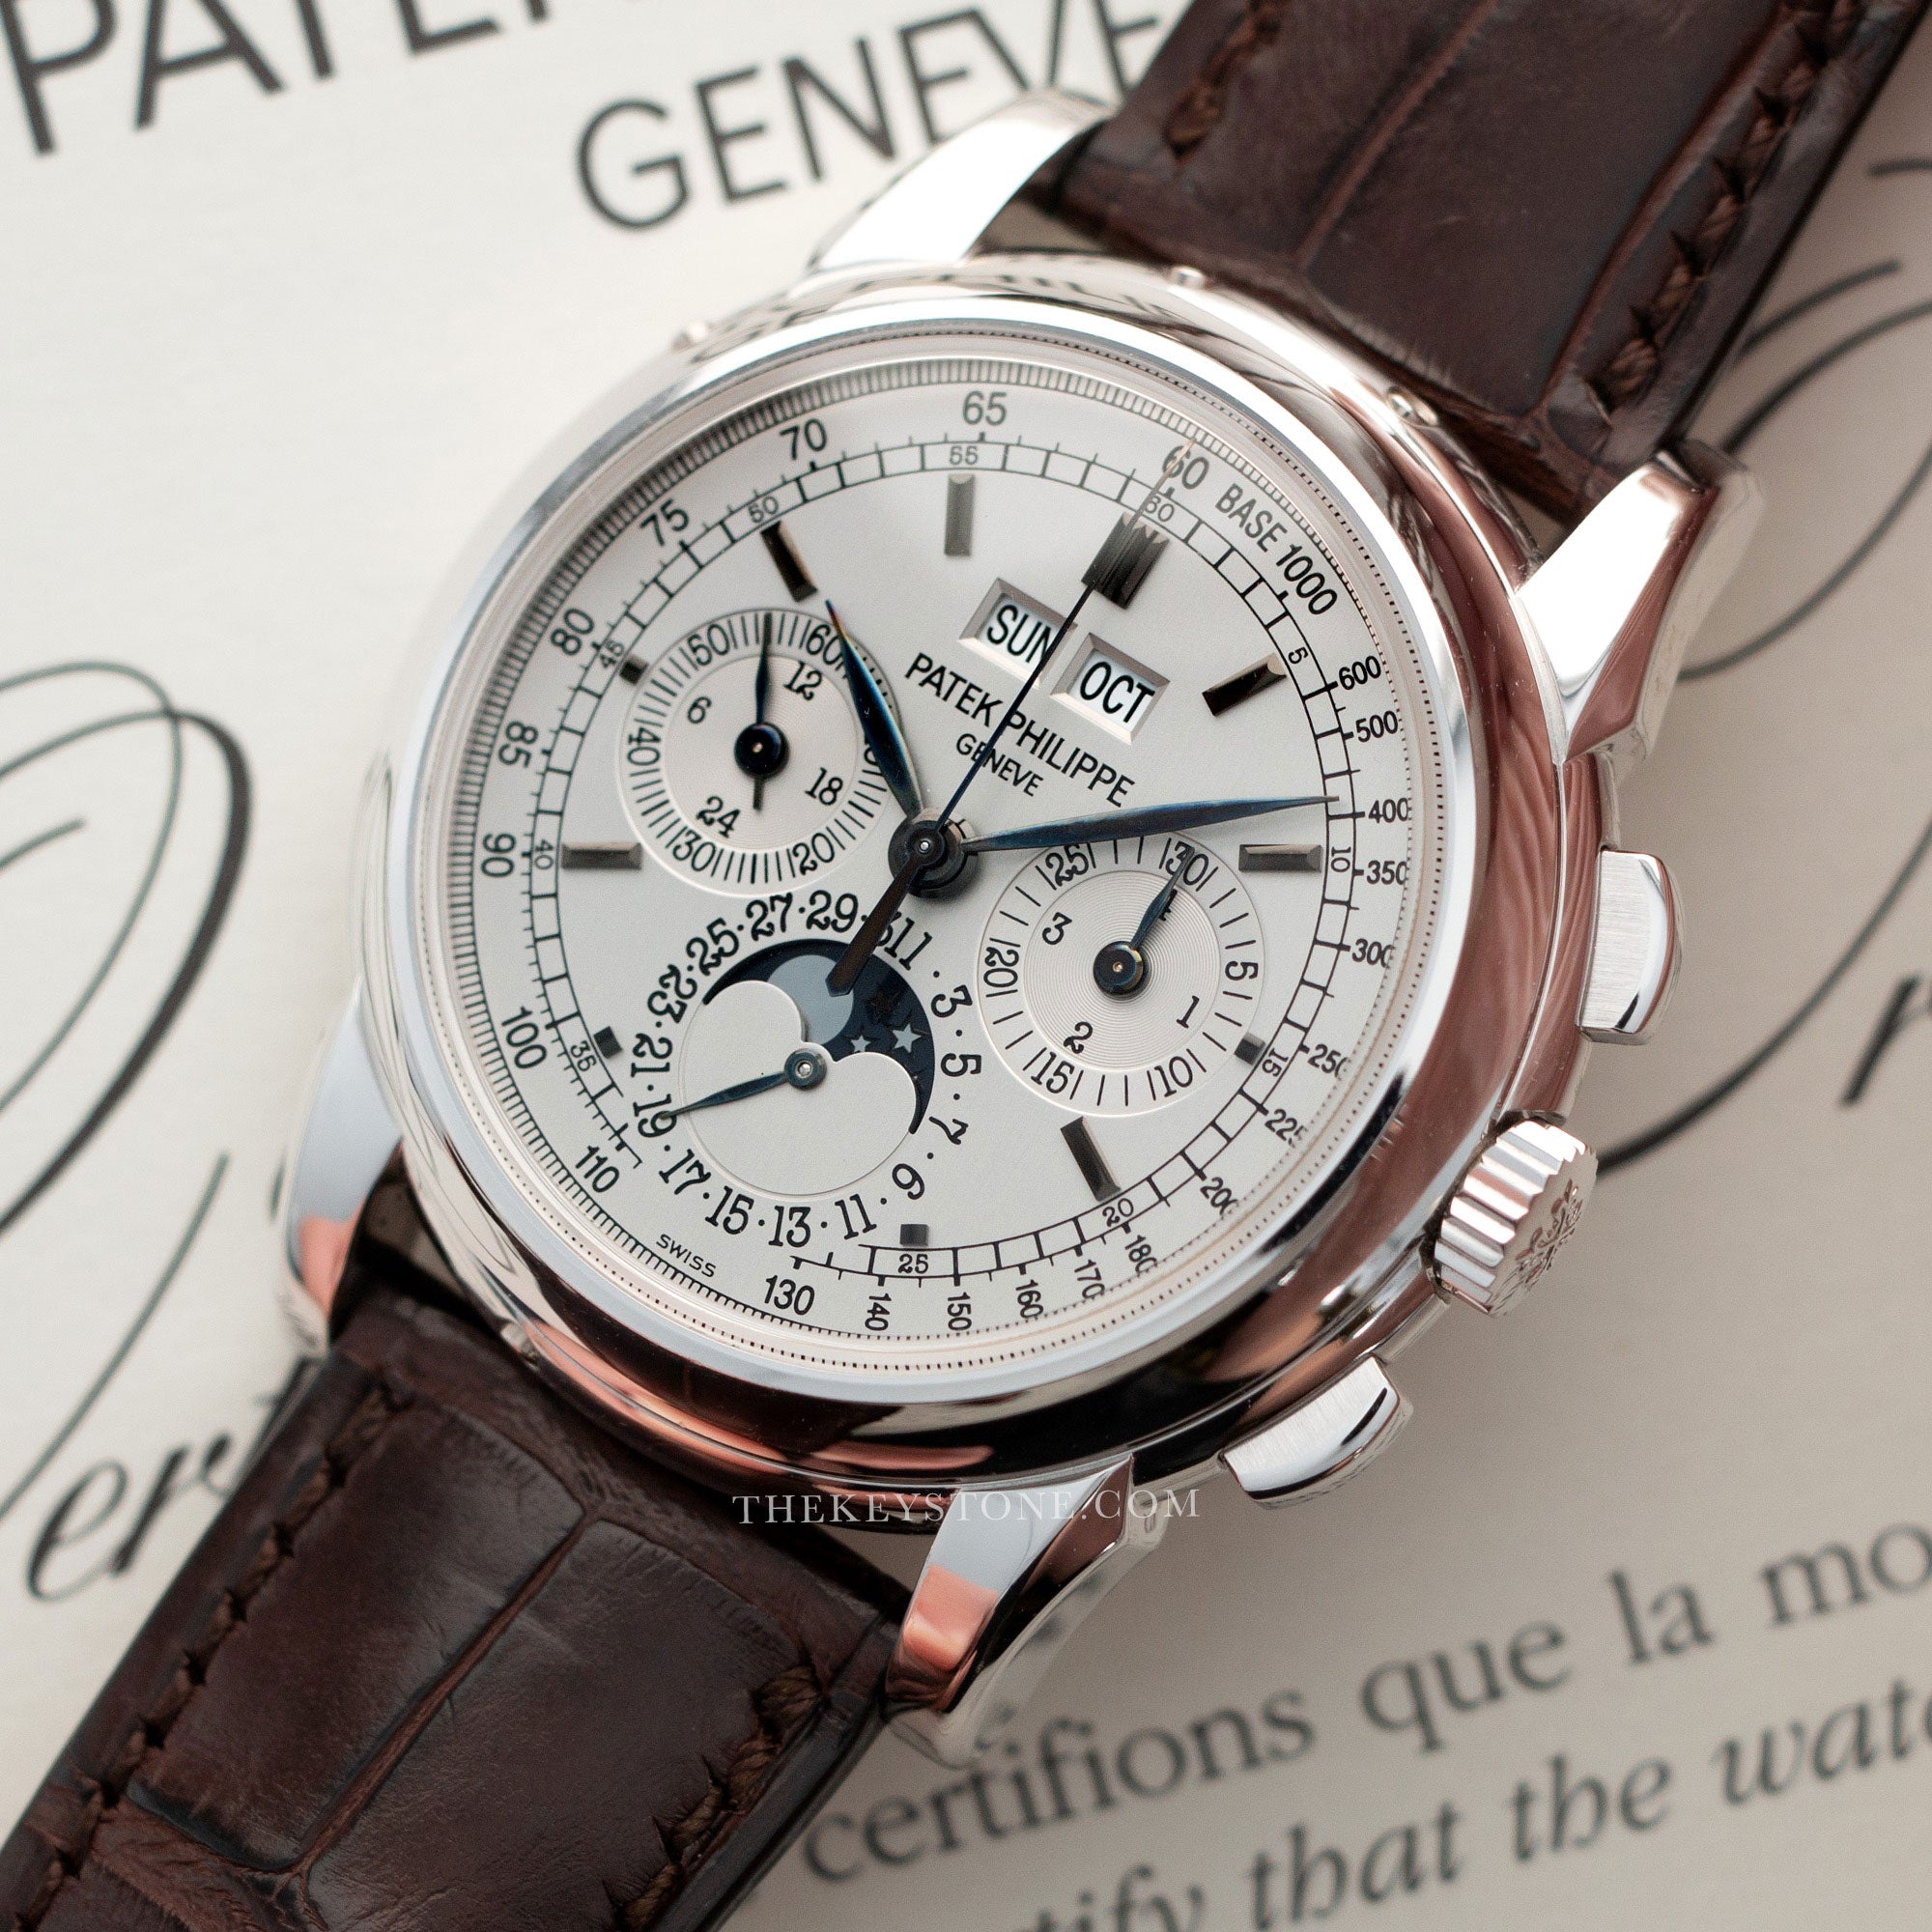 Patek Philippe - Patek Philippe White Gold Perpetual Calendar Chronograph Ref. 5970 - The Keystone Watches